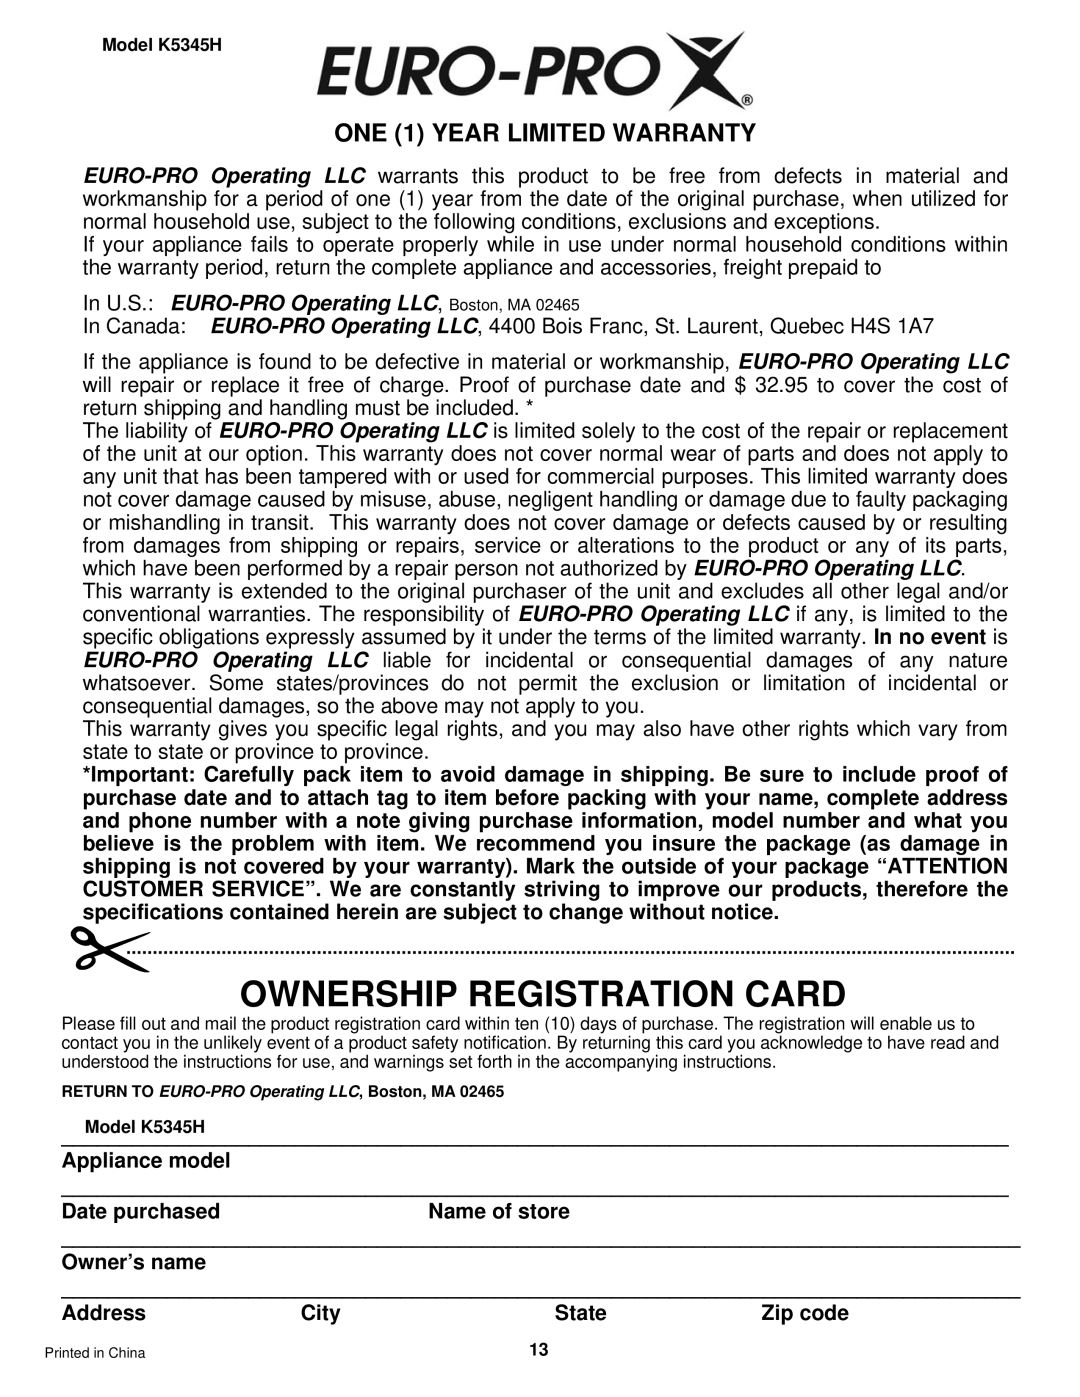 Bravetti K5345H Ownership Registration Card, ONE 1 YEAR LIMITED WARRANTY, In U.S. EURO-PROOperating LLC, Boston, MA 